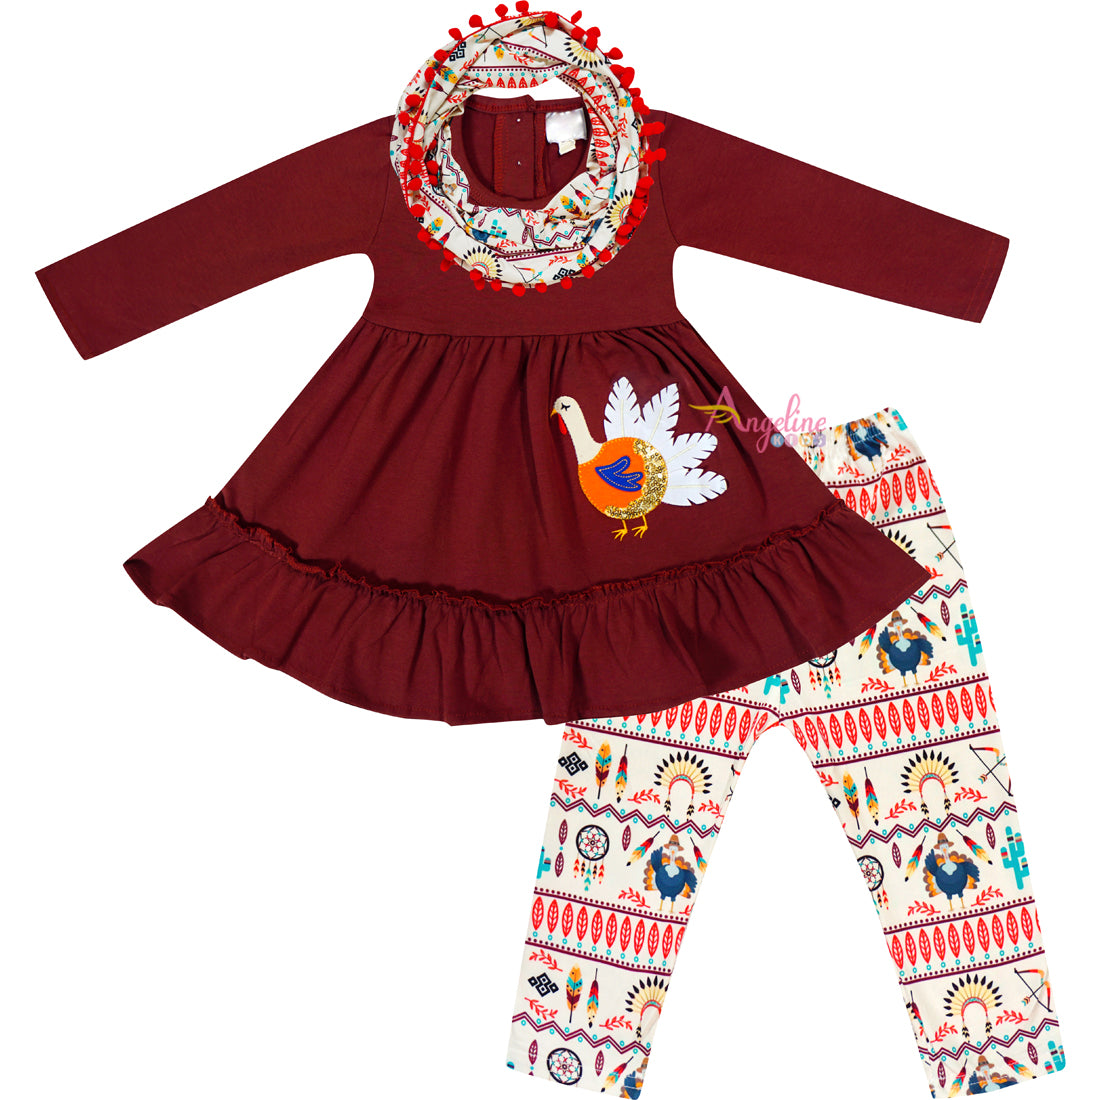 Baby Toddler Little Girls Thanksgiving Turkey Scarf Outfit Set - Brown/Aztec - Angeline Kids